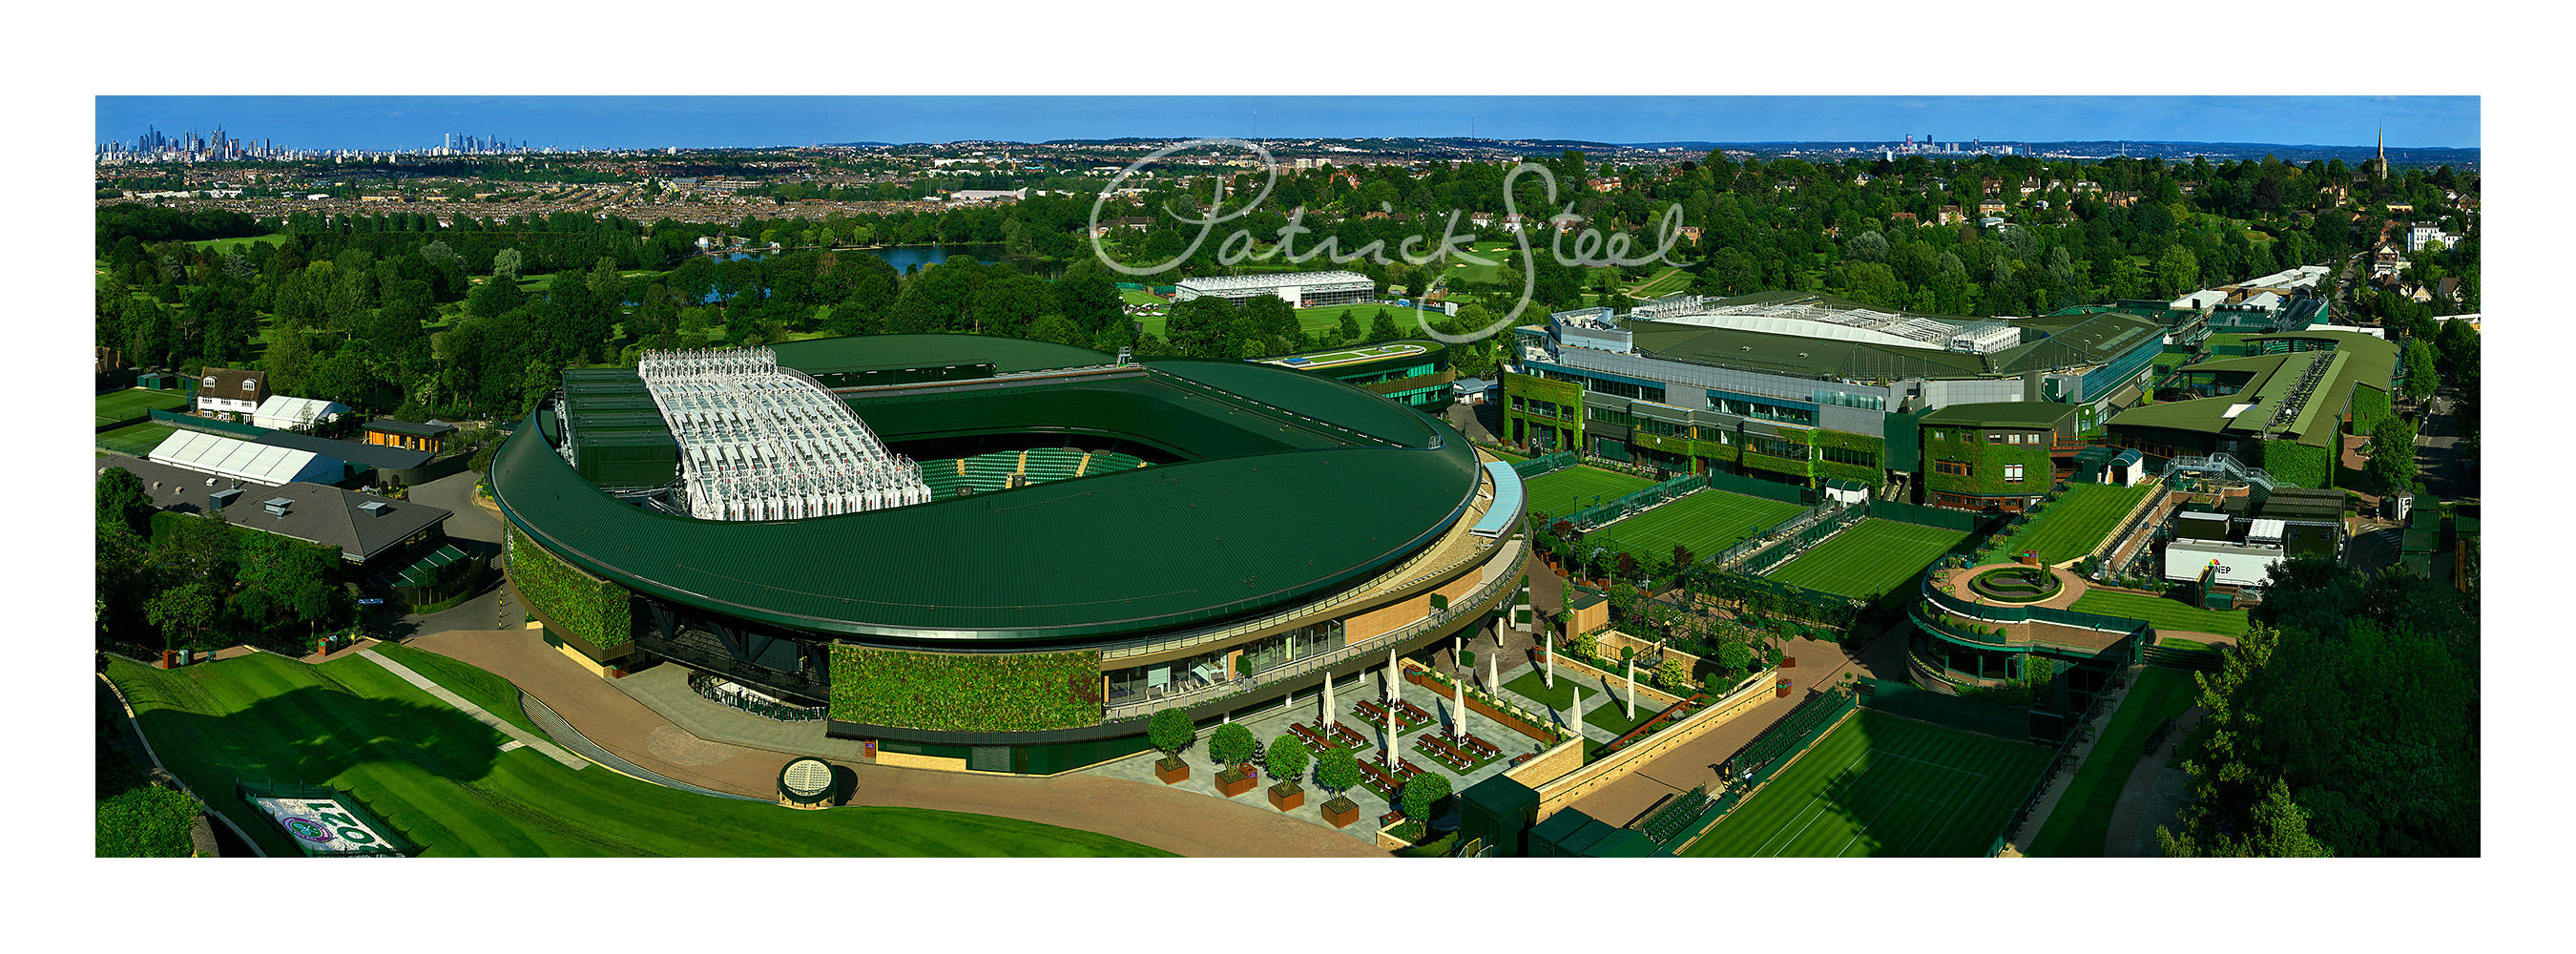 Title: Wimbledon Tennis 2021 | Details coming soon...